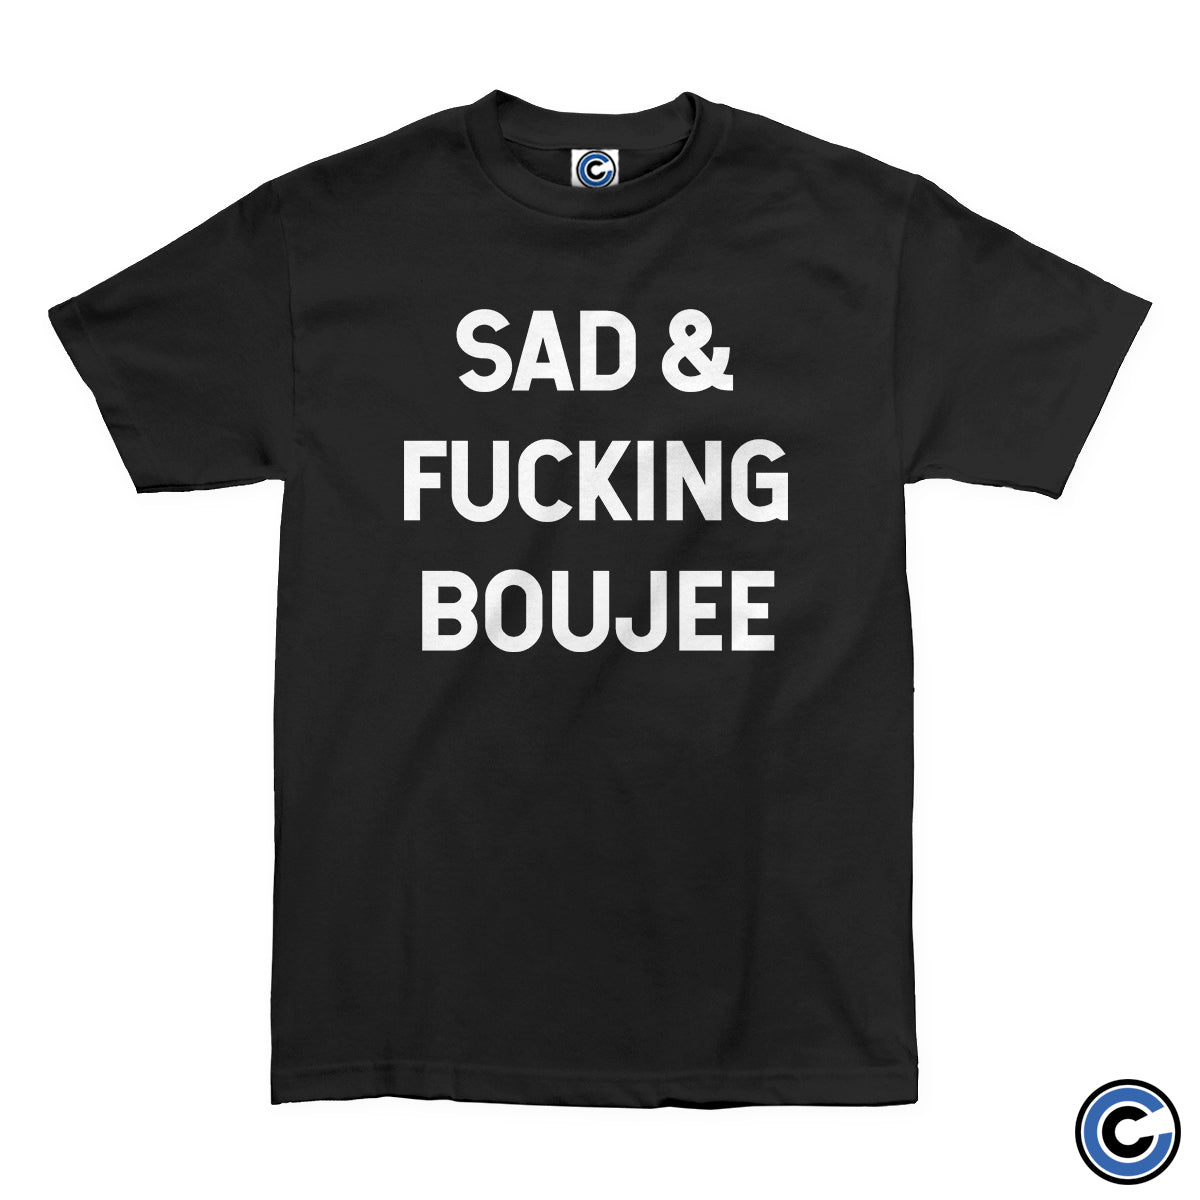 Sad And Boujee "Fucking Boujee" Shirt